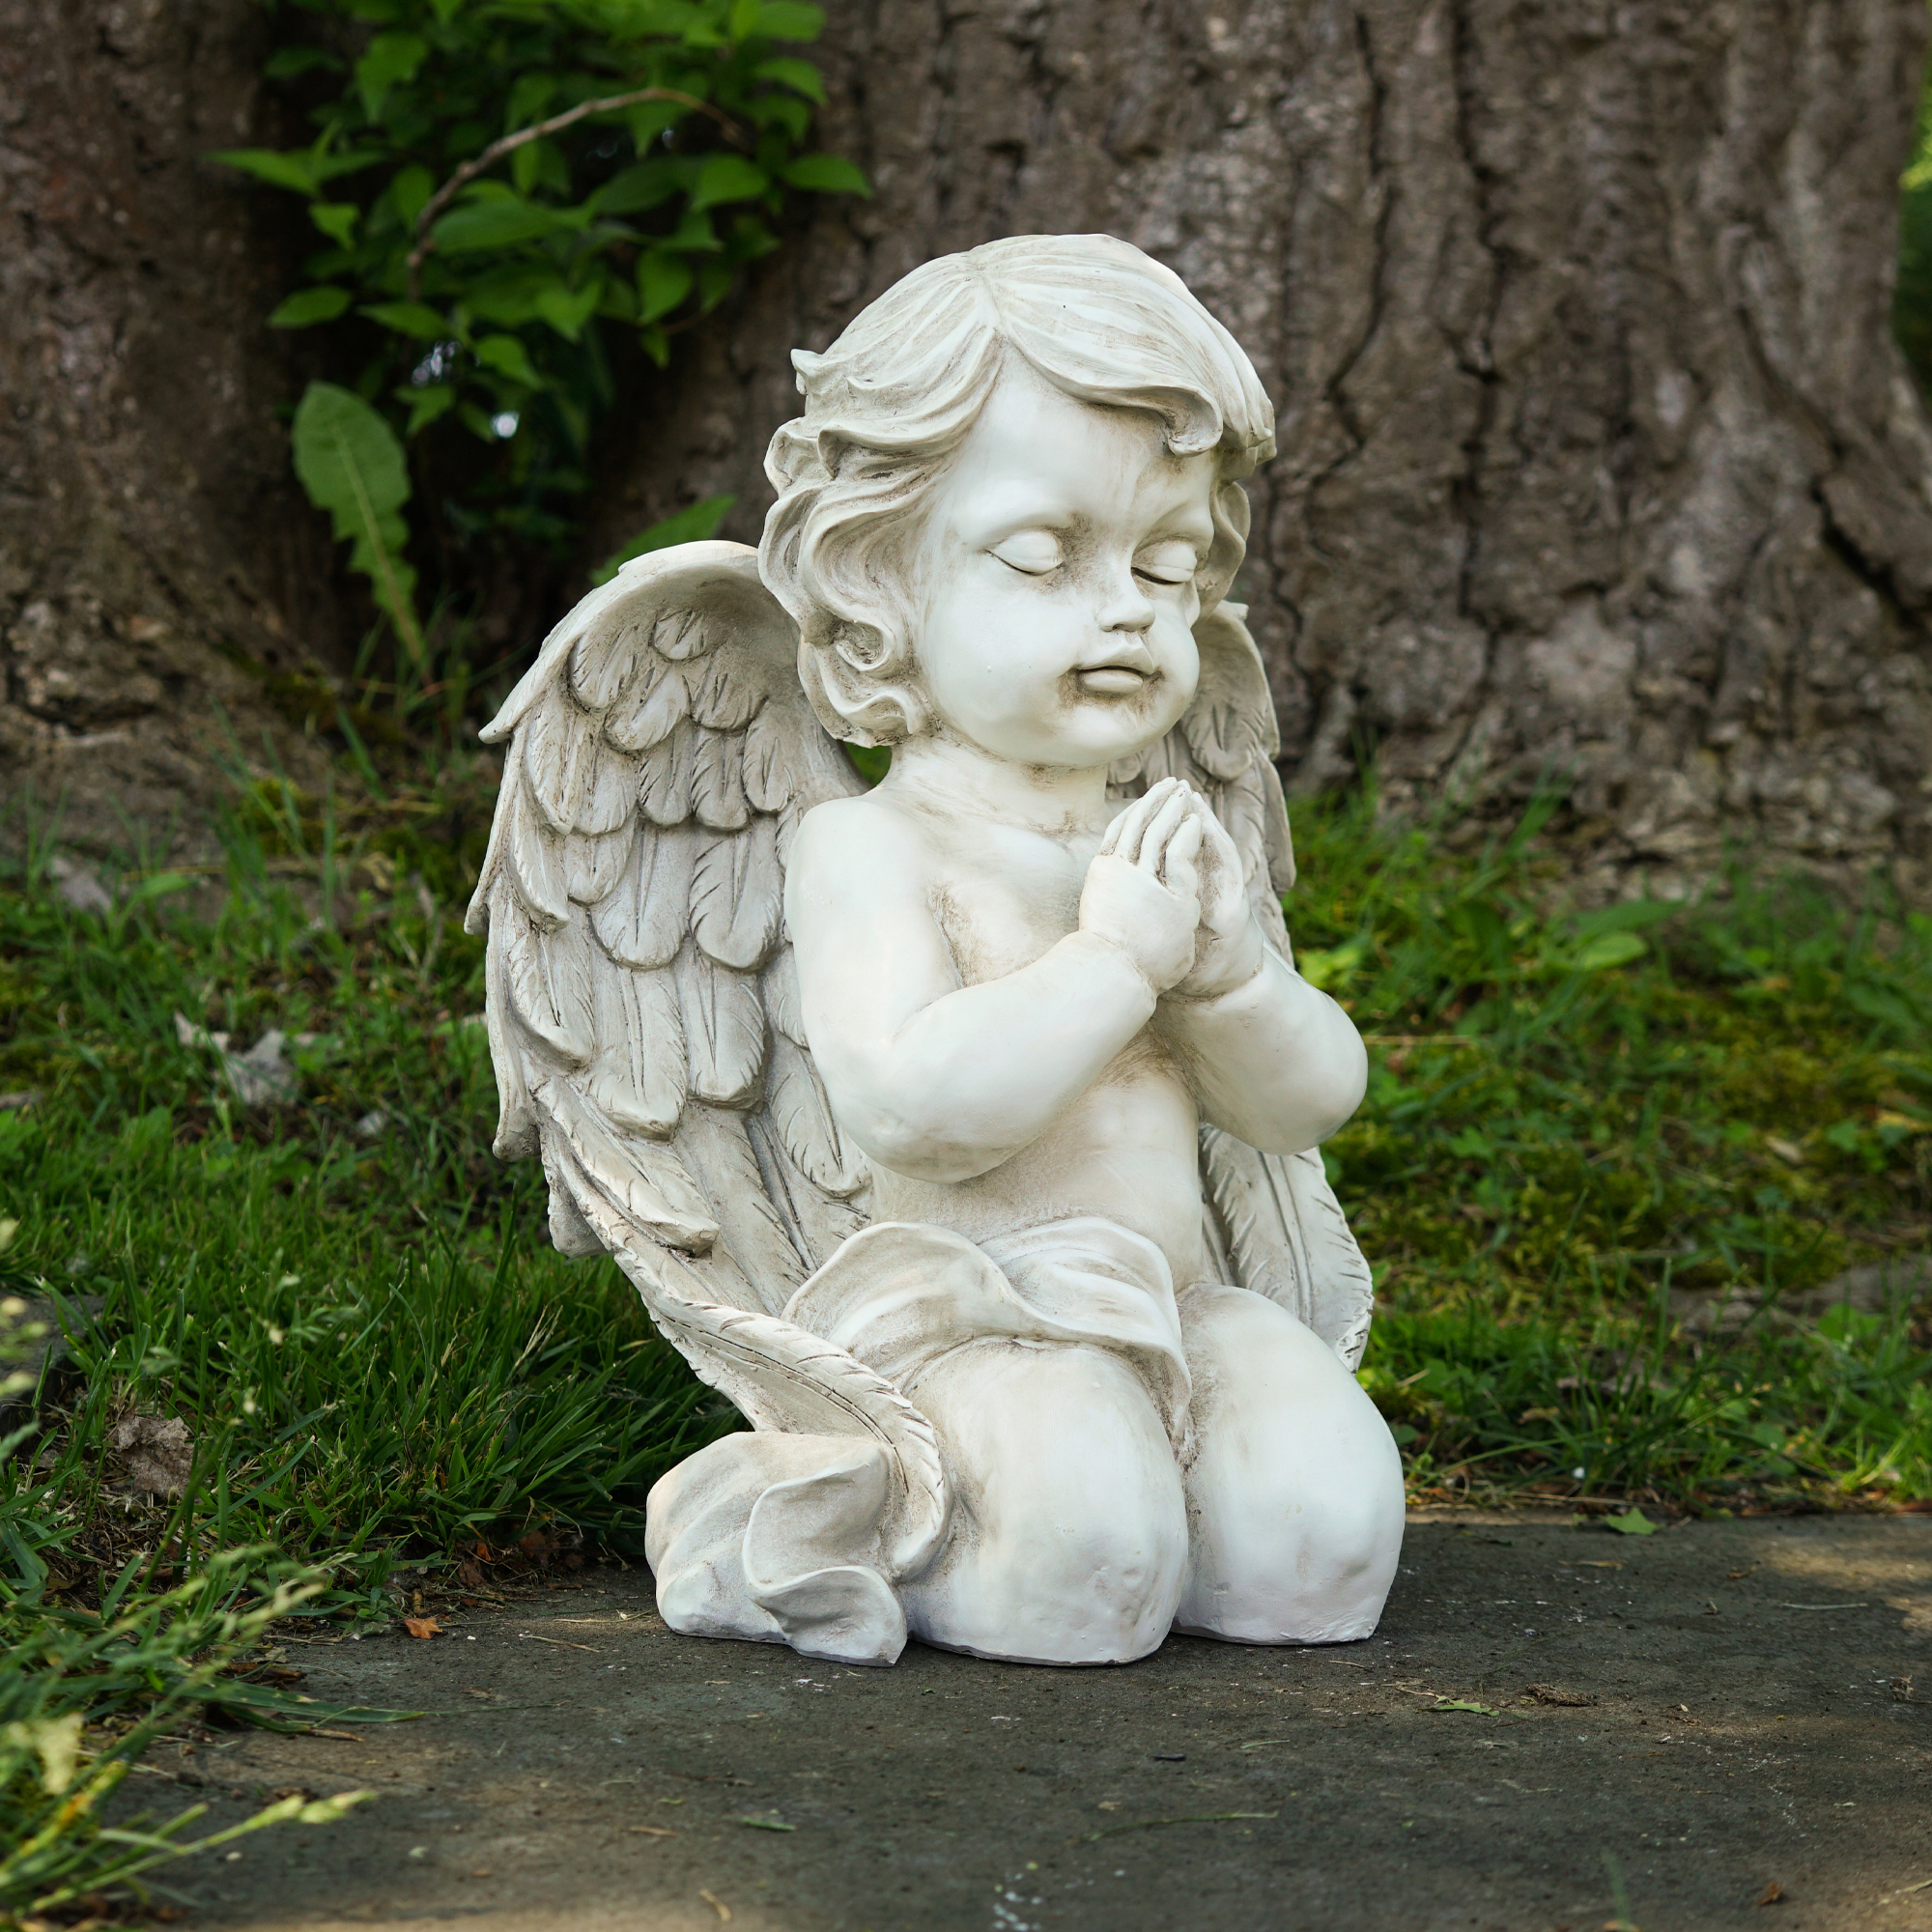 Northlight 13.5" Kneeling Praying Cherub Angel Religious Outdoor Patio Garden Statue - Gray - image 2 of 5